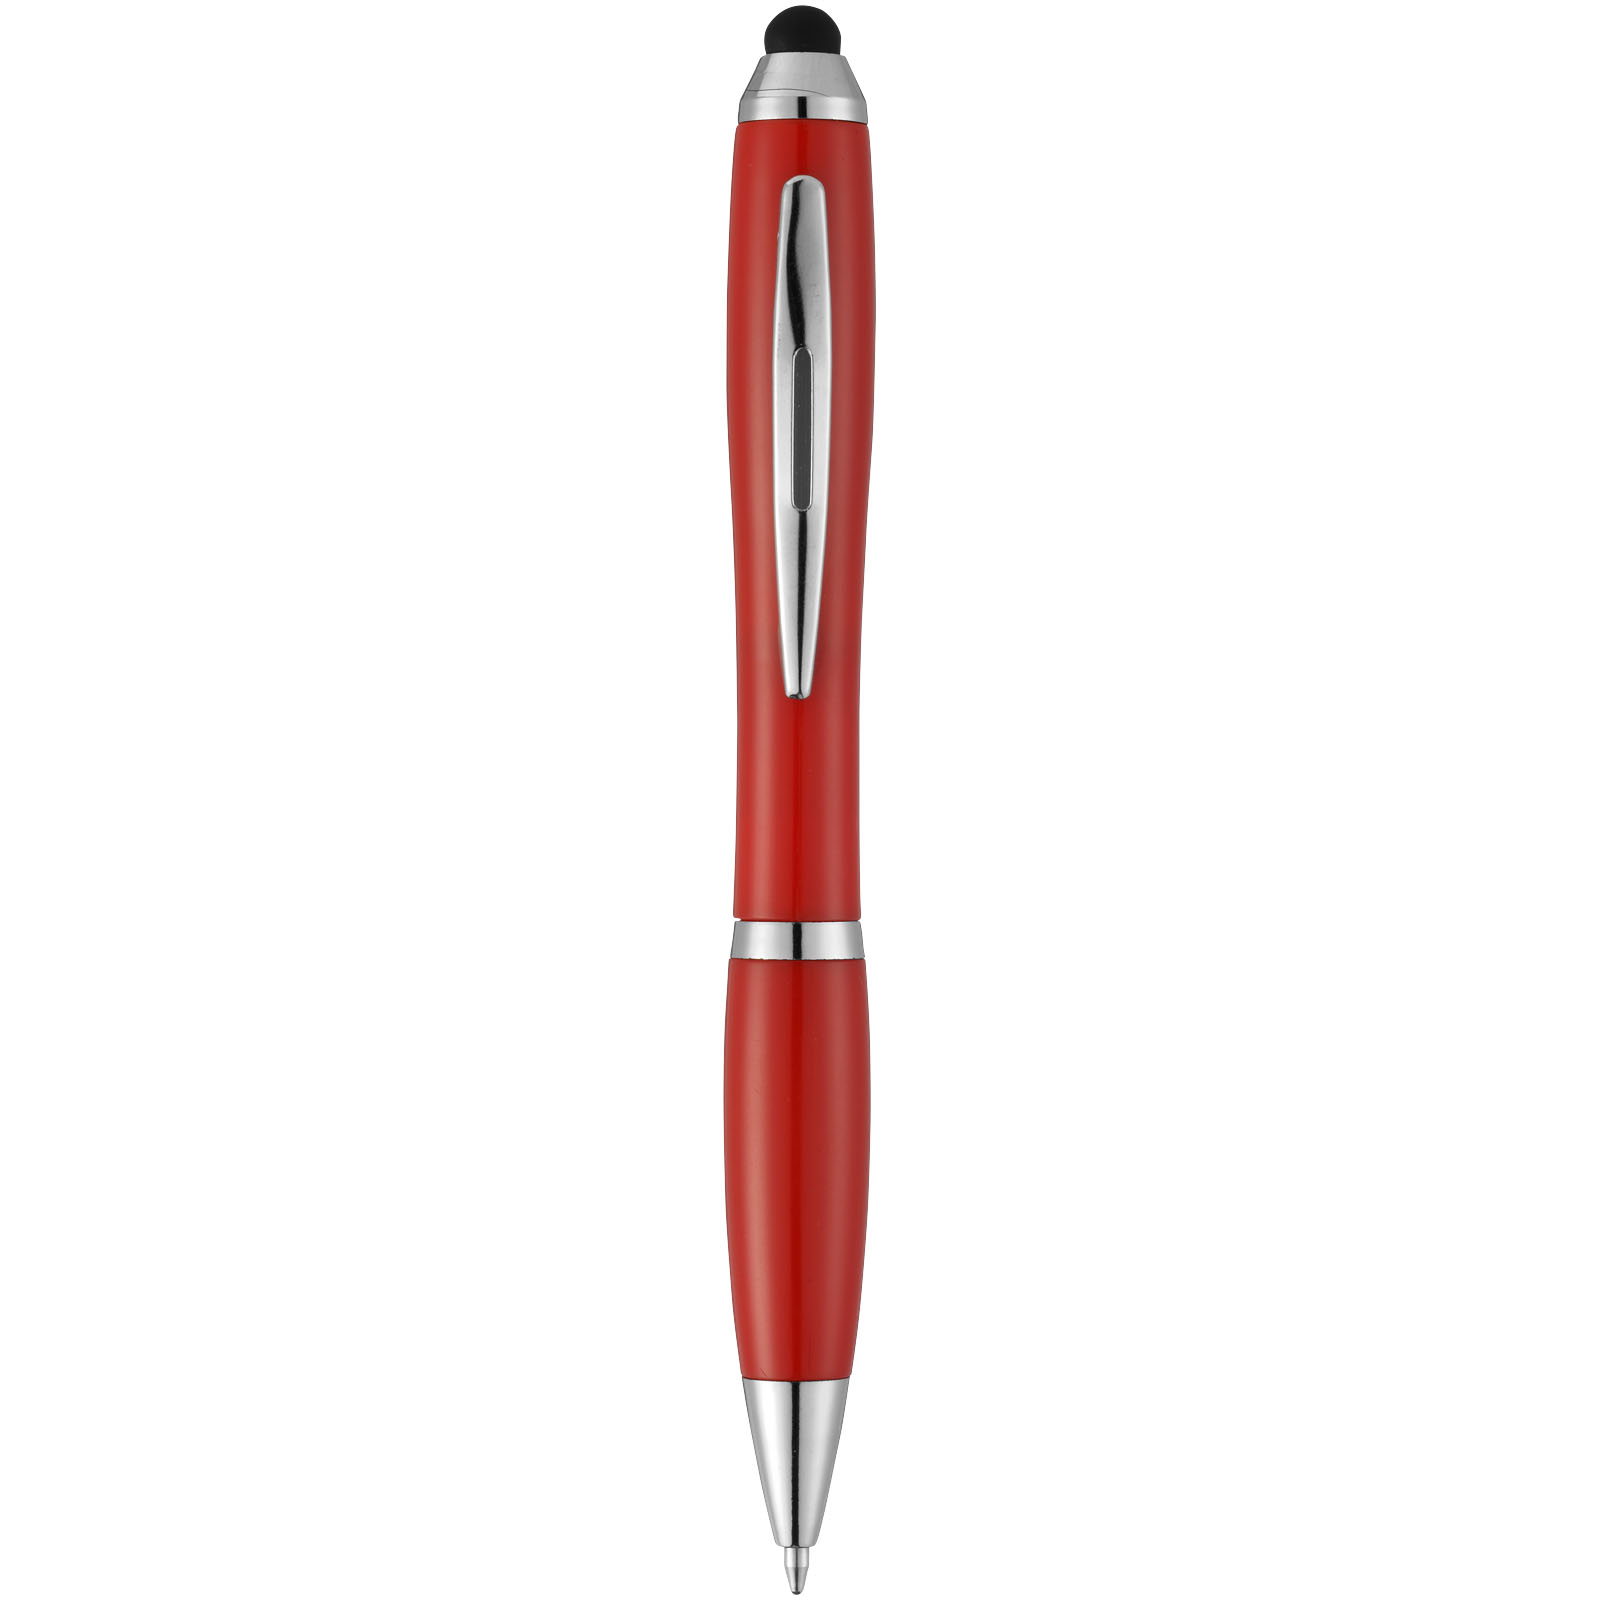 Advertising Ballpoint Pens - Nash stylus ballpoint pen with coloured grip - 0